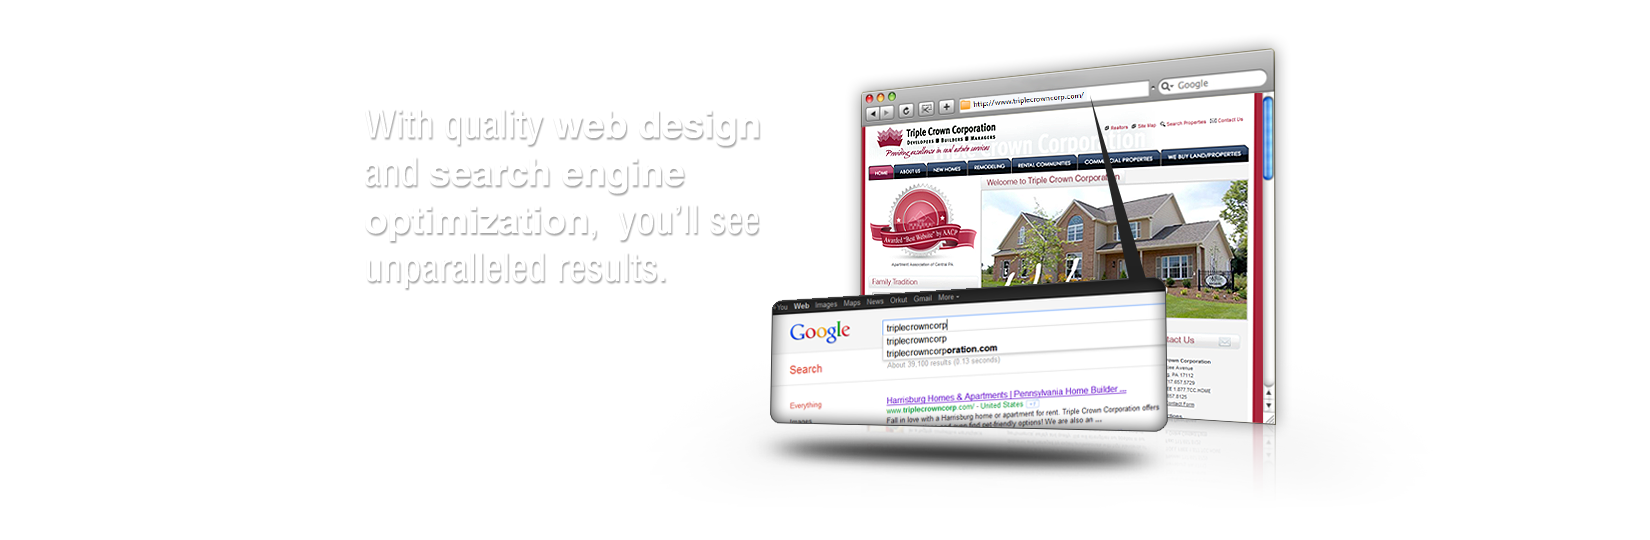 Quality Web Design & Search Engine Optimization